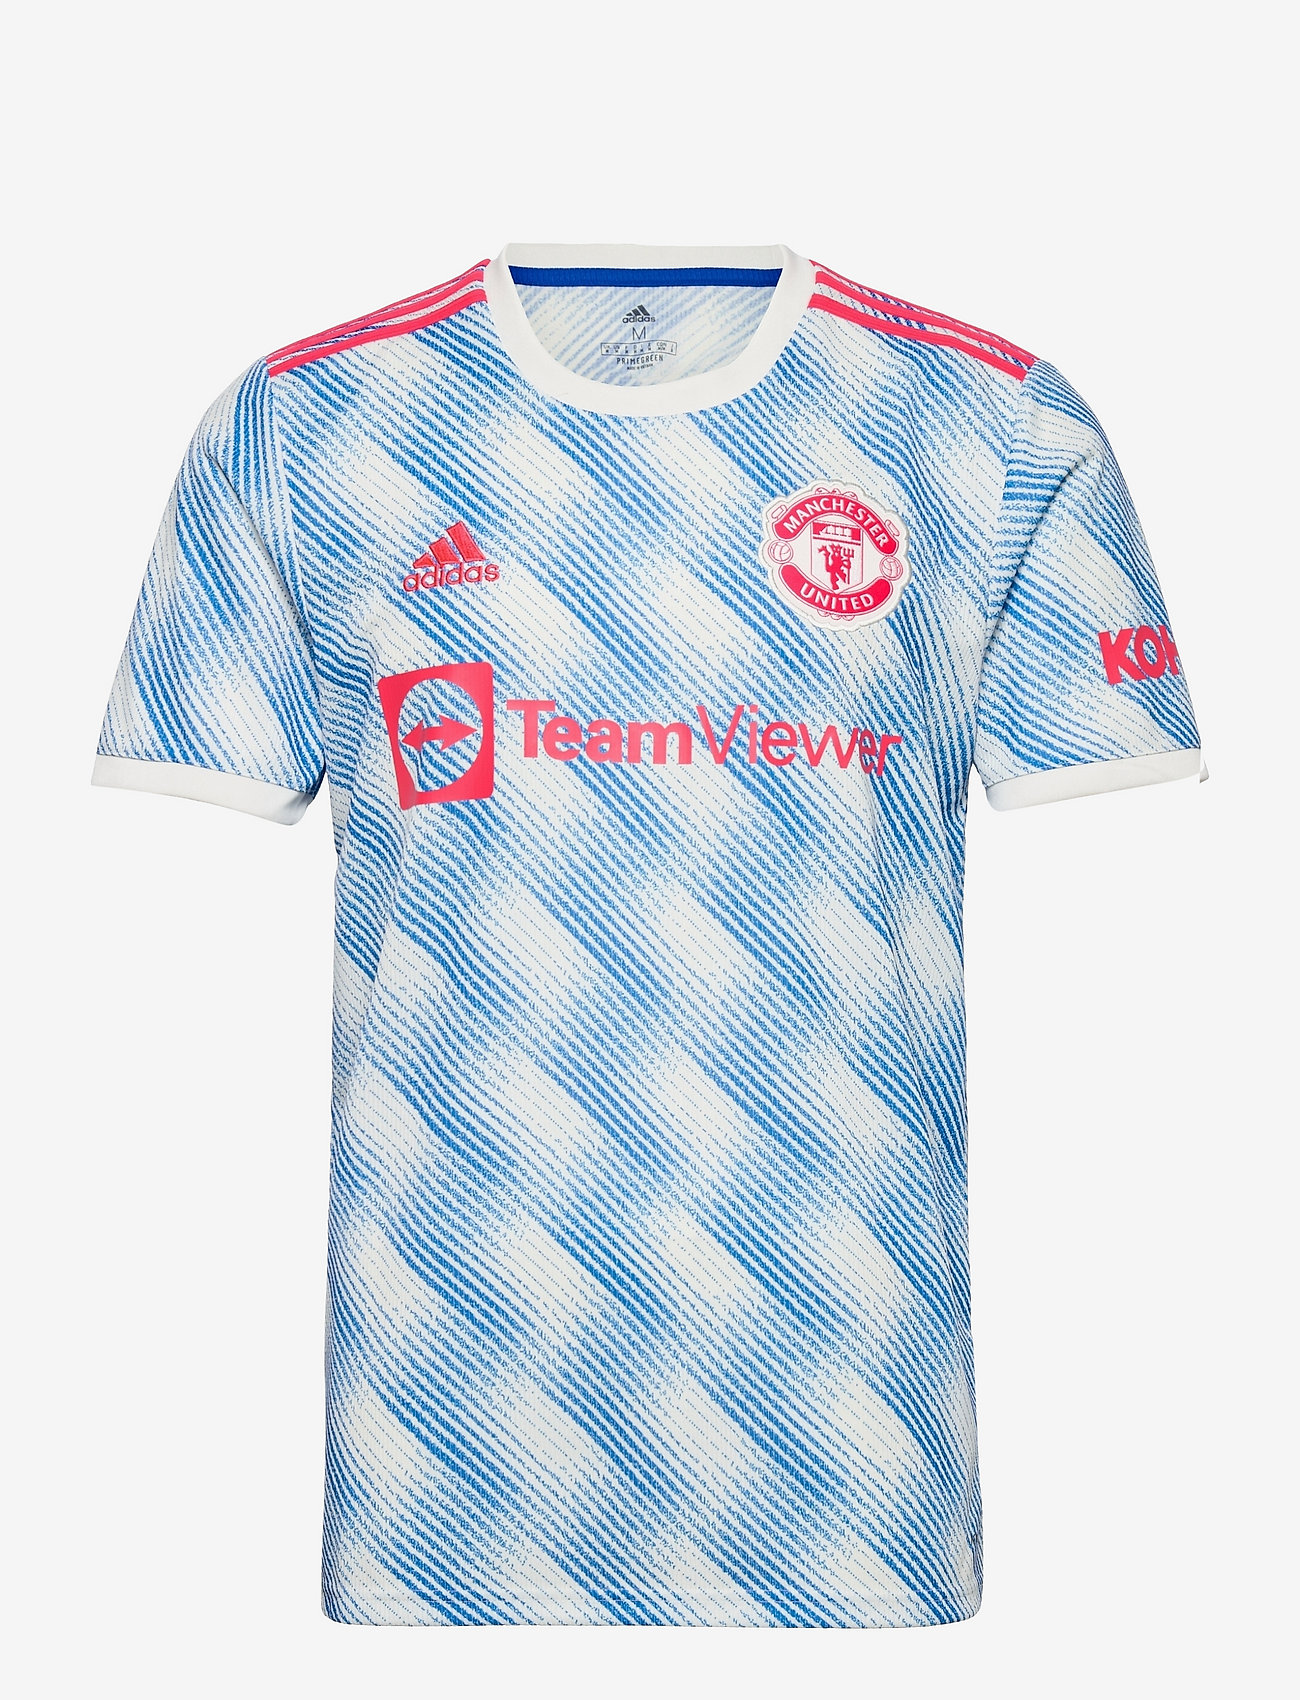 Adidas Performance Manchester United 21 22 Away Jersey Oberteile T Shirts Boozt Com